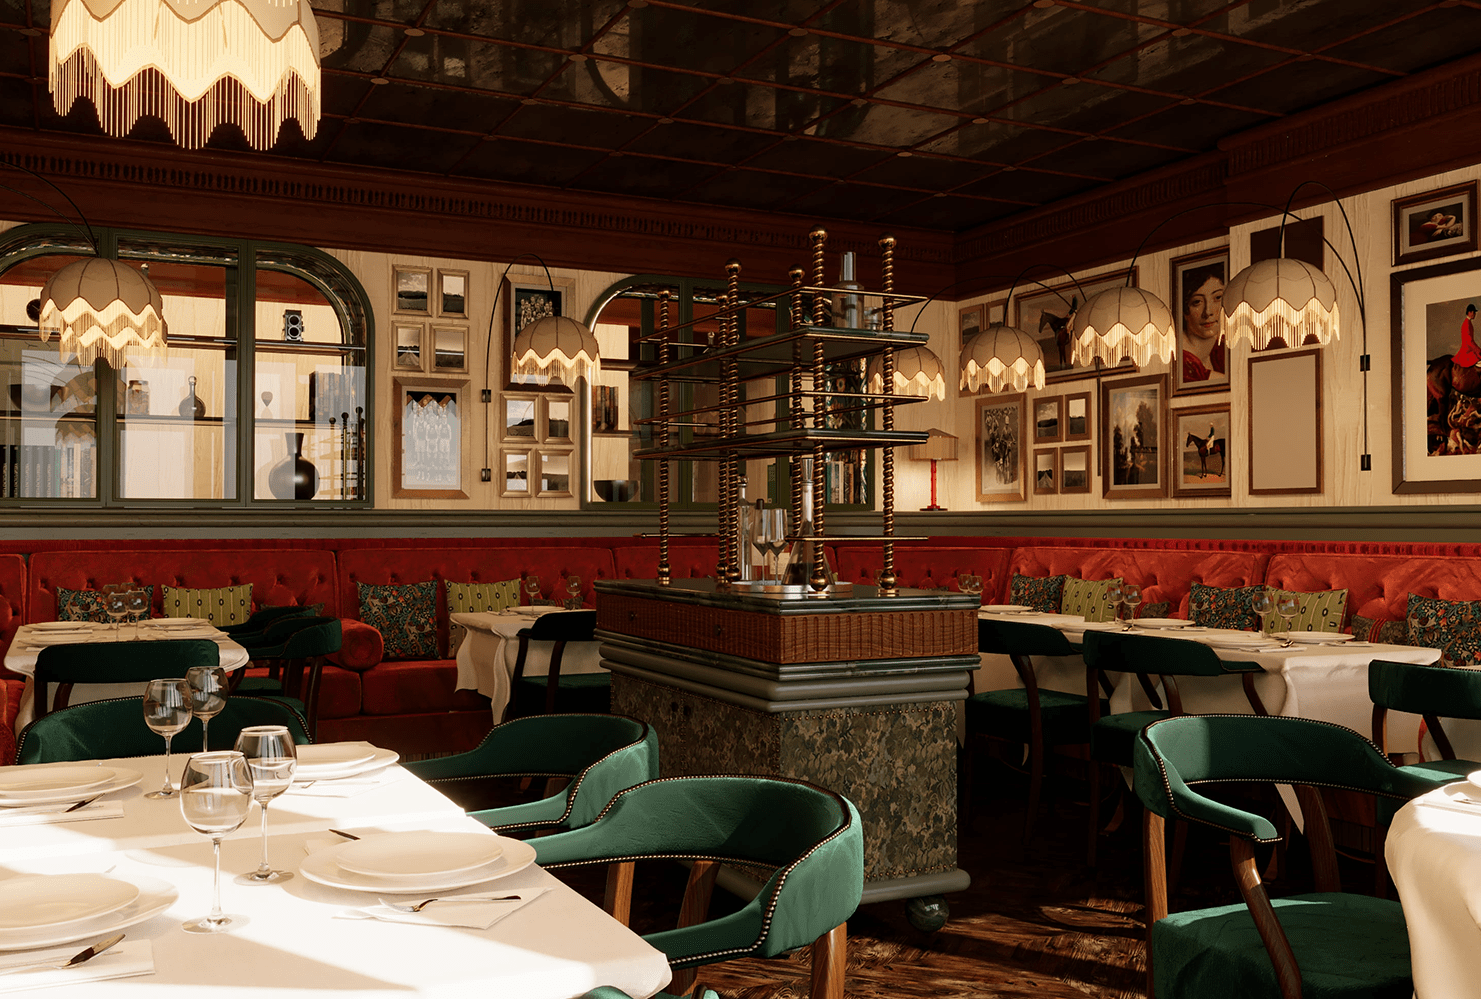 Interior restaurant design in Paris for the new Zeffirino